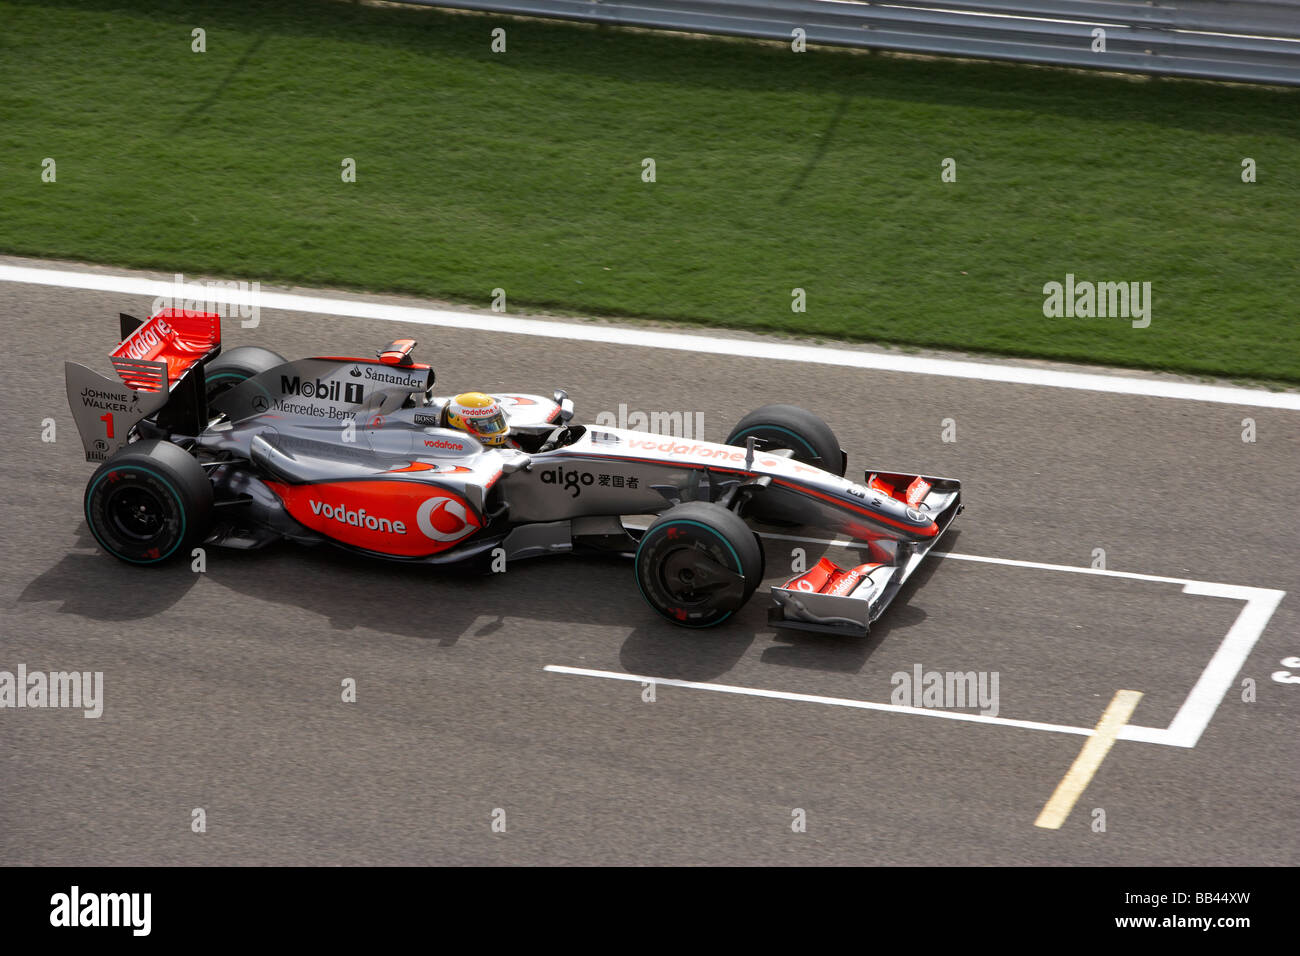 Lewis Hamilton UK McLaren Mercedes at the 2009 Bahrain Grand Prix Stock Photo